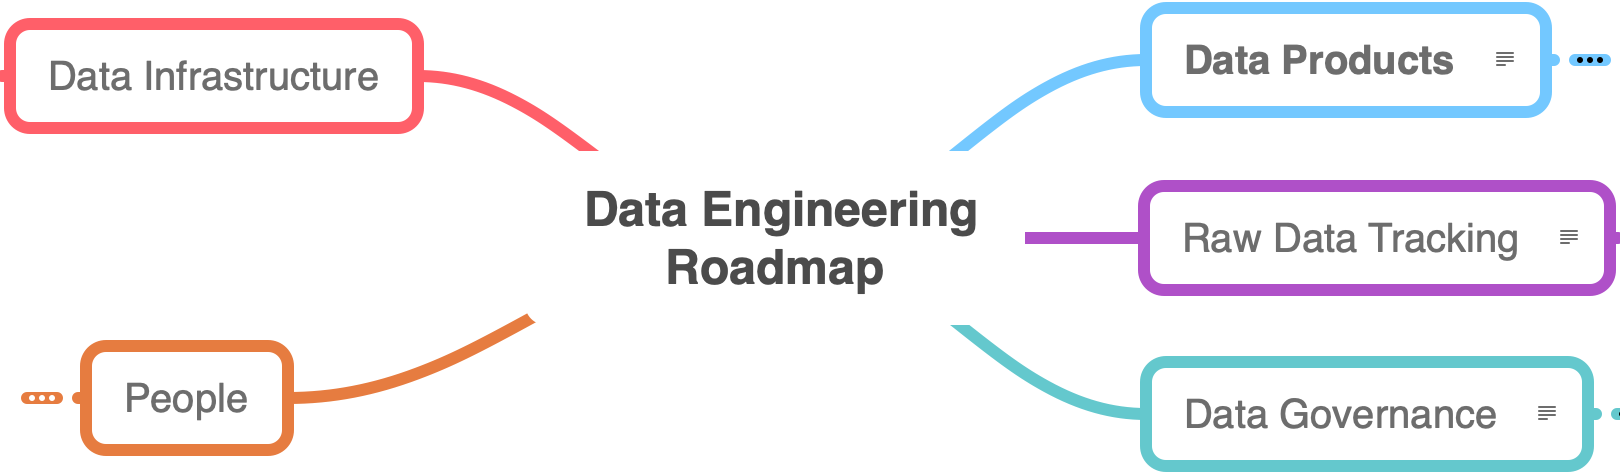 /assets/data_team_roadmap/Data-Roadmap-Collapsed.png